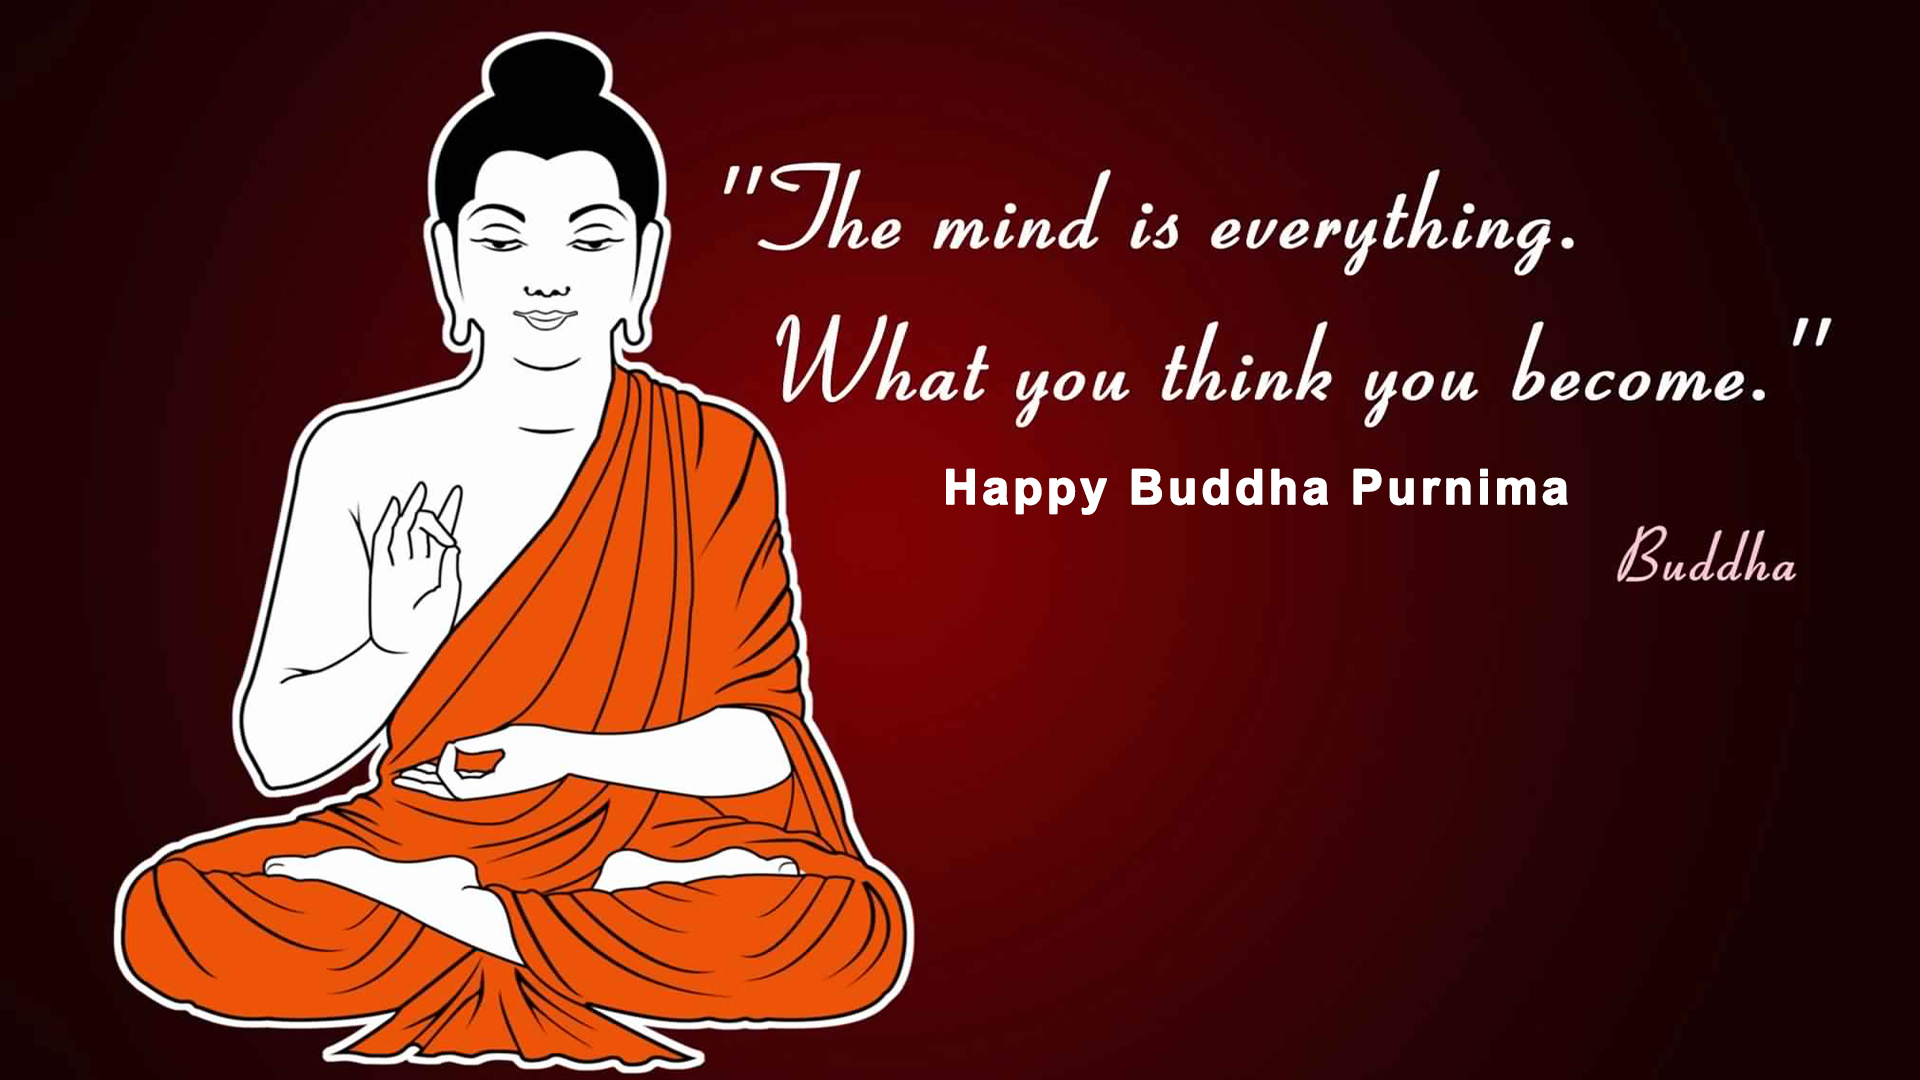 Happy Buddha Purnima Quotes In Hindi | Buddha Purnima